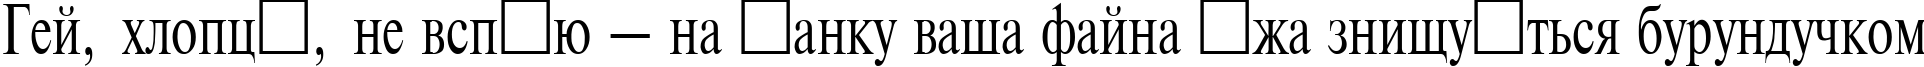 Пример написания шрифтом TimesET70n текста на украинском